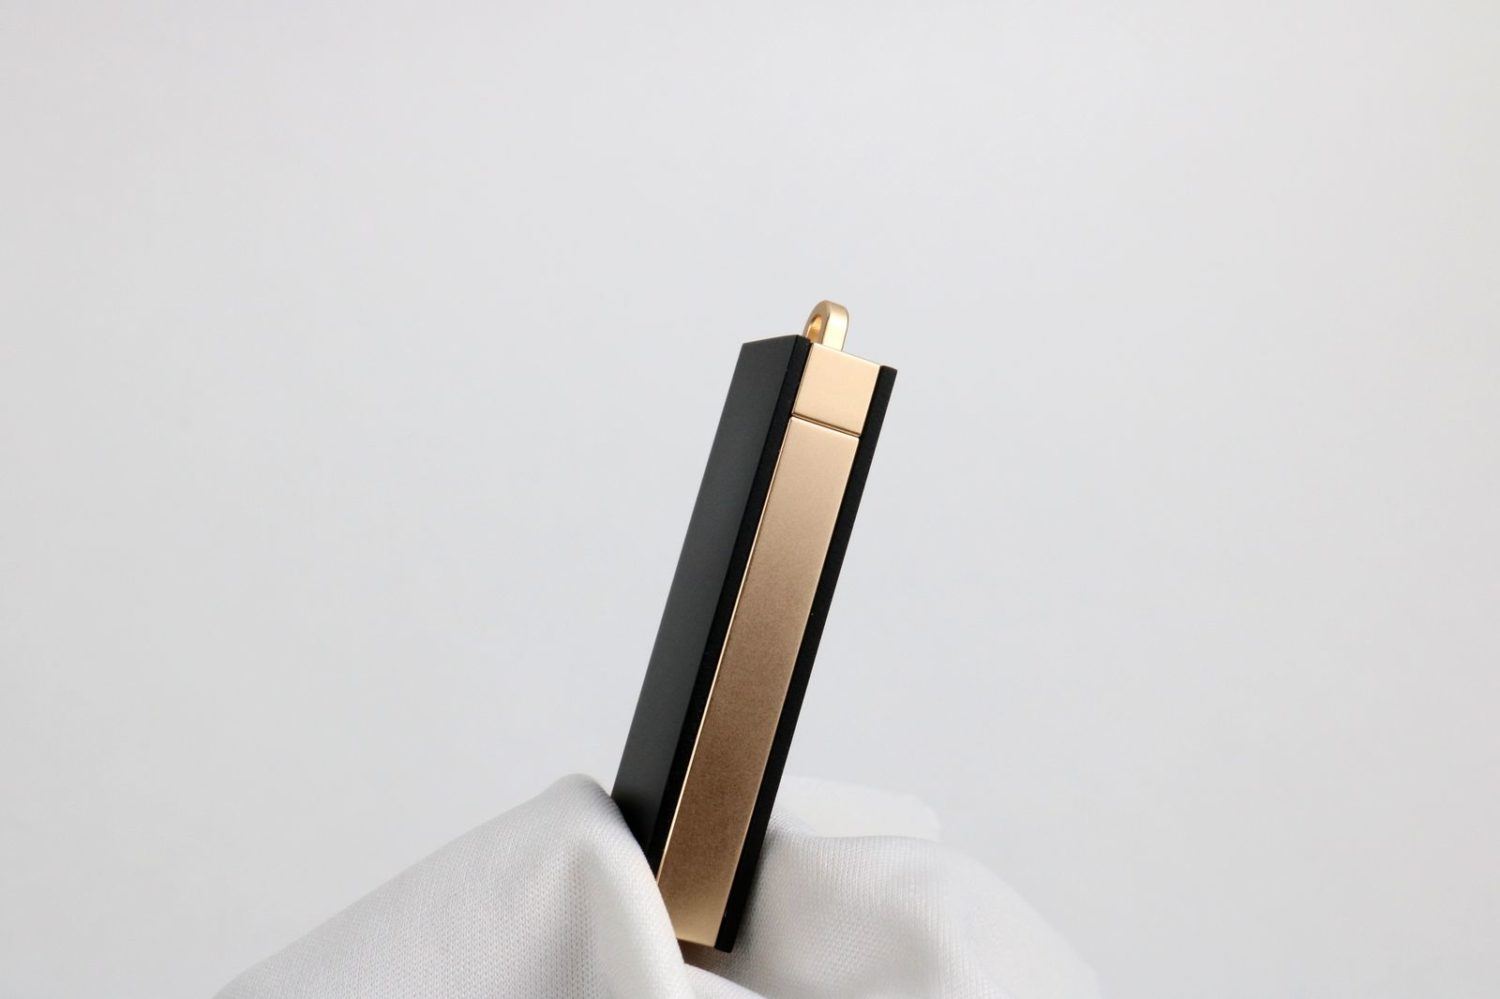 Allergy Amulet Nabs $3.3M To Launch World’s Smallest, Fastest Consumer Food Allergen Sensor